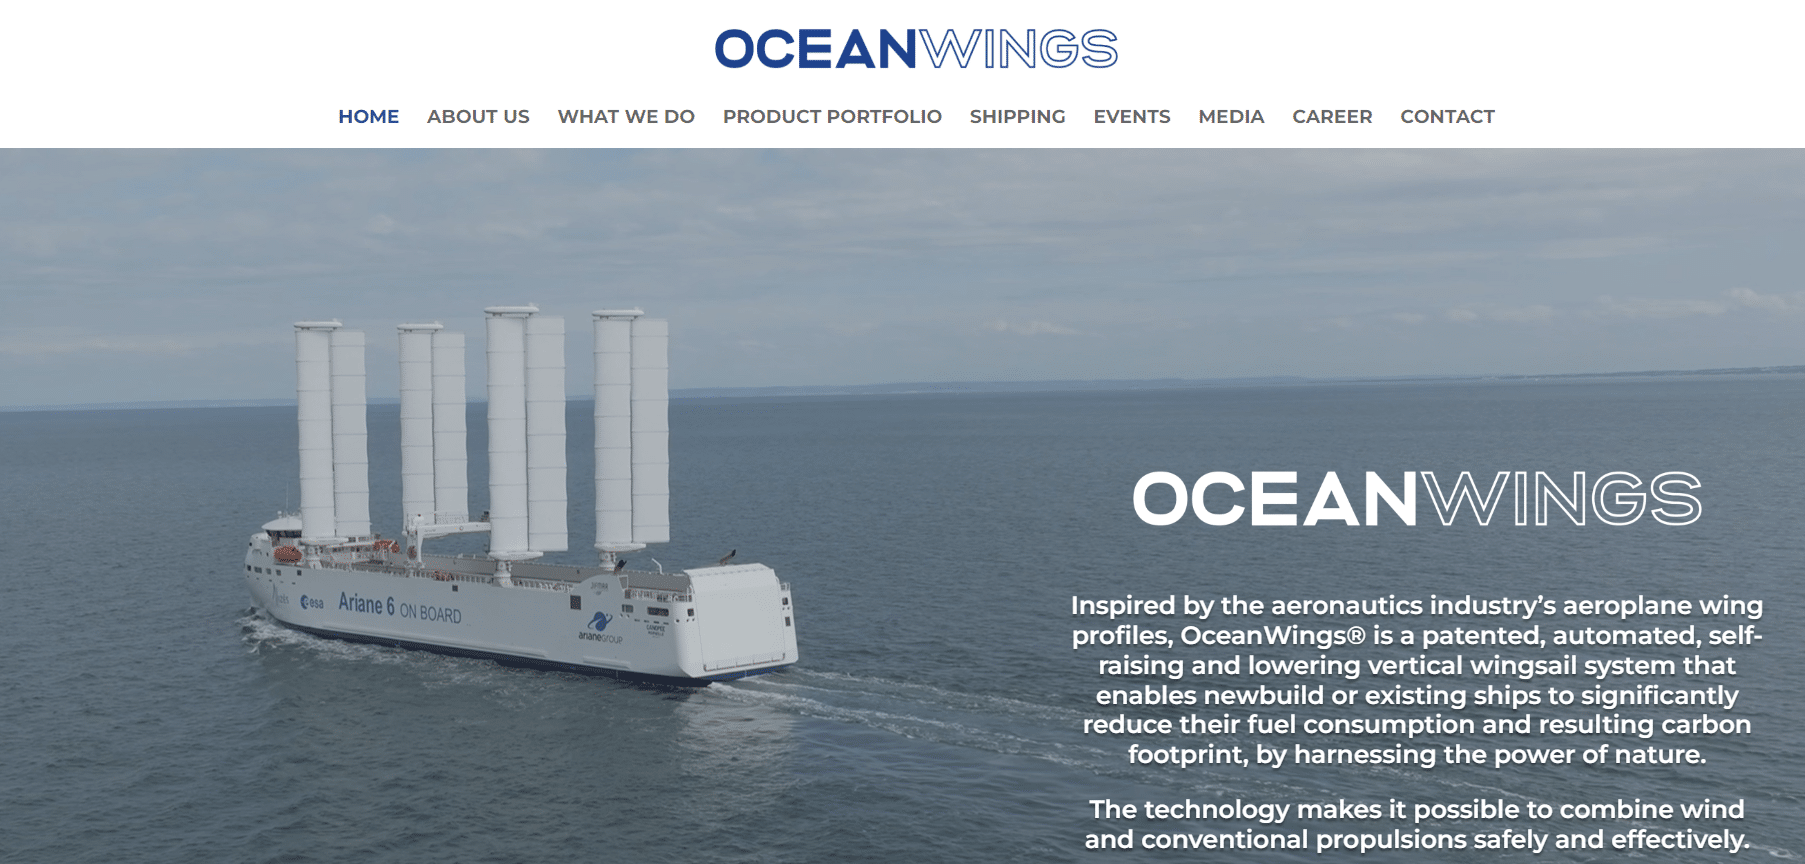 AYRO rebrands to OceanWings